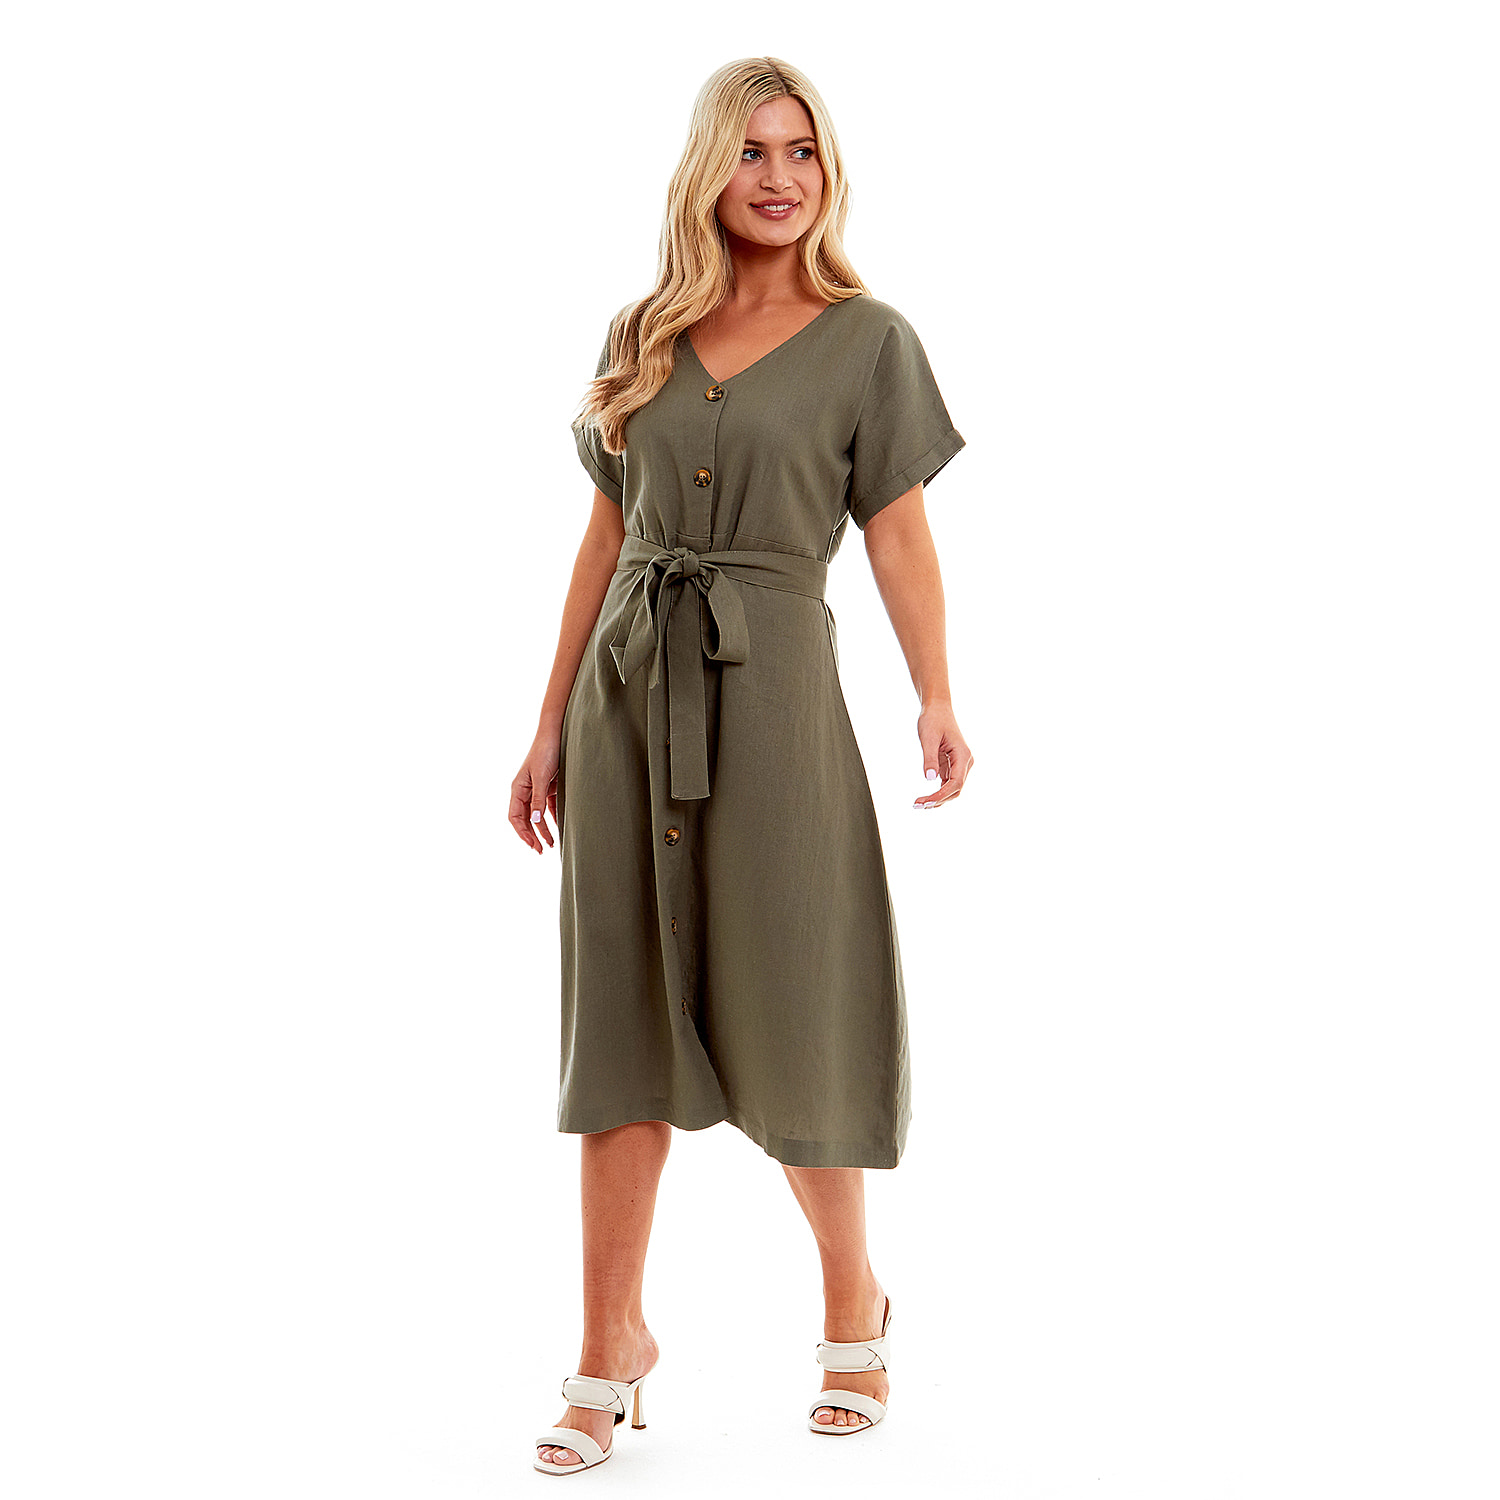 Charlotte West Ladies Linen Belted Dress (Size 10) - Khaki